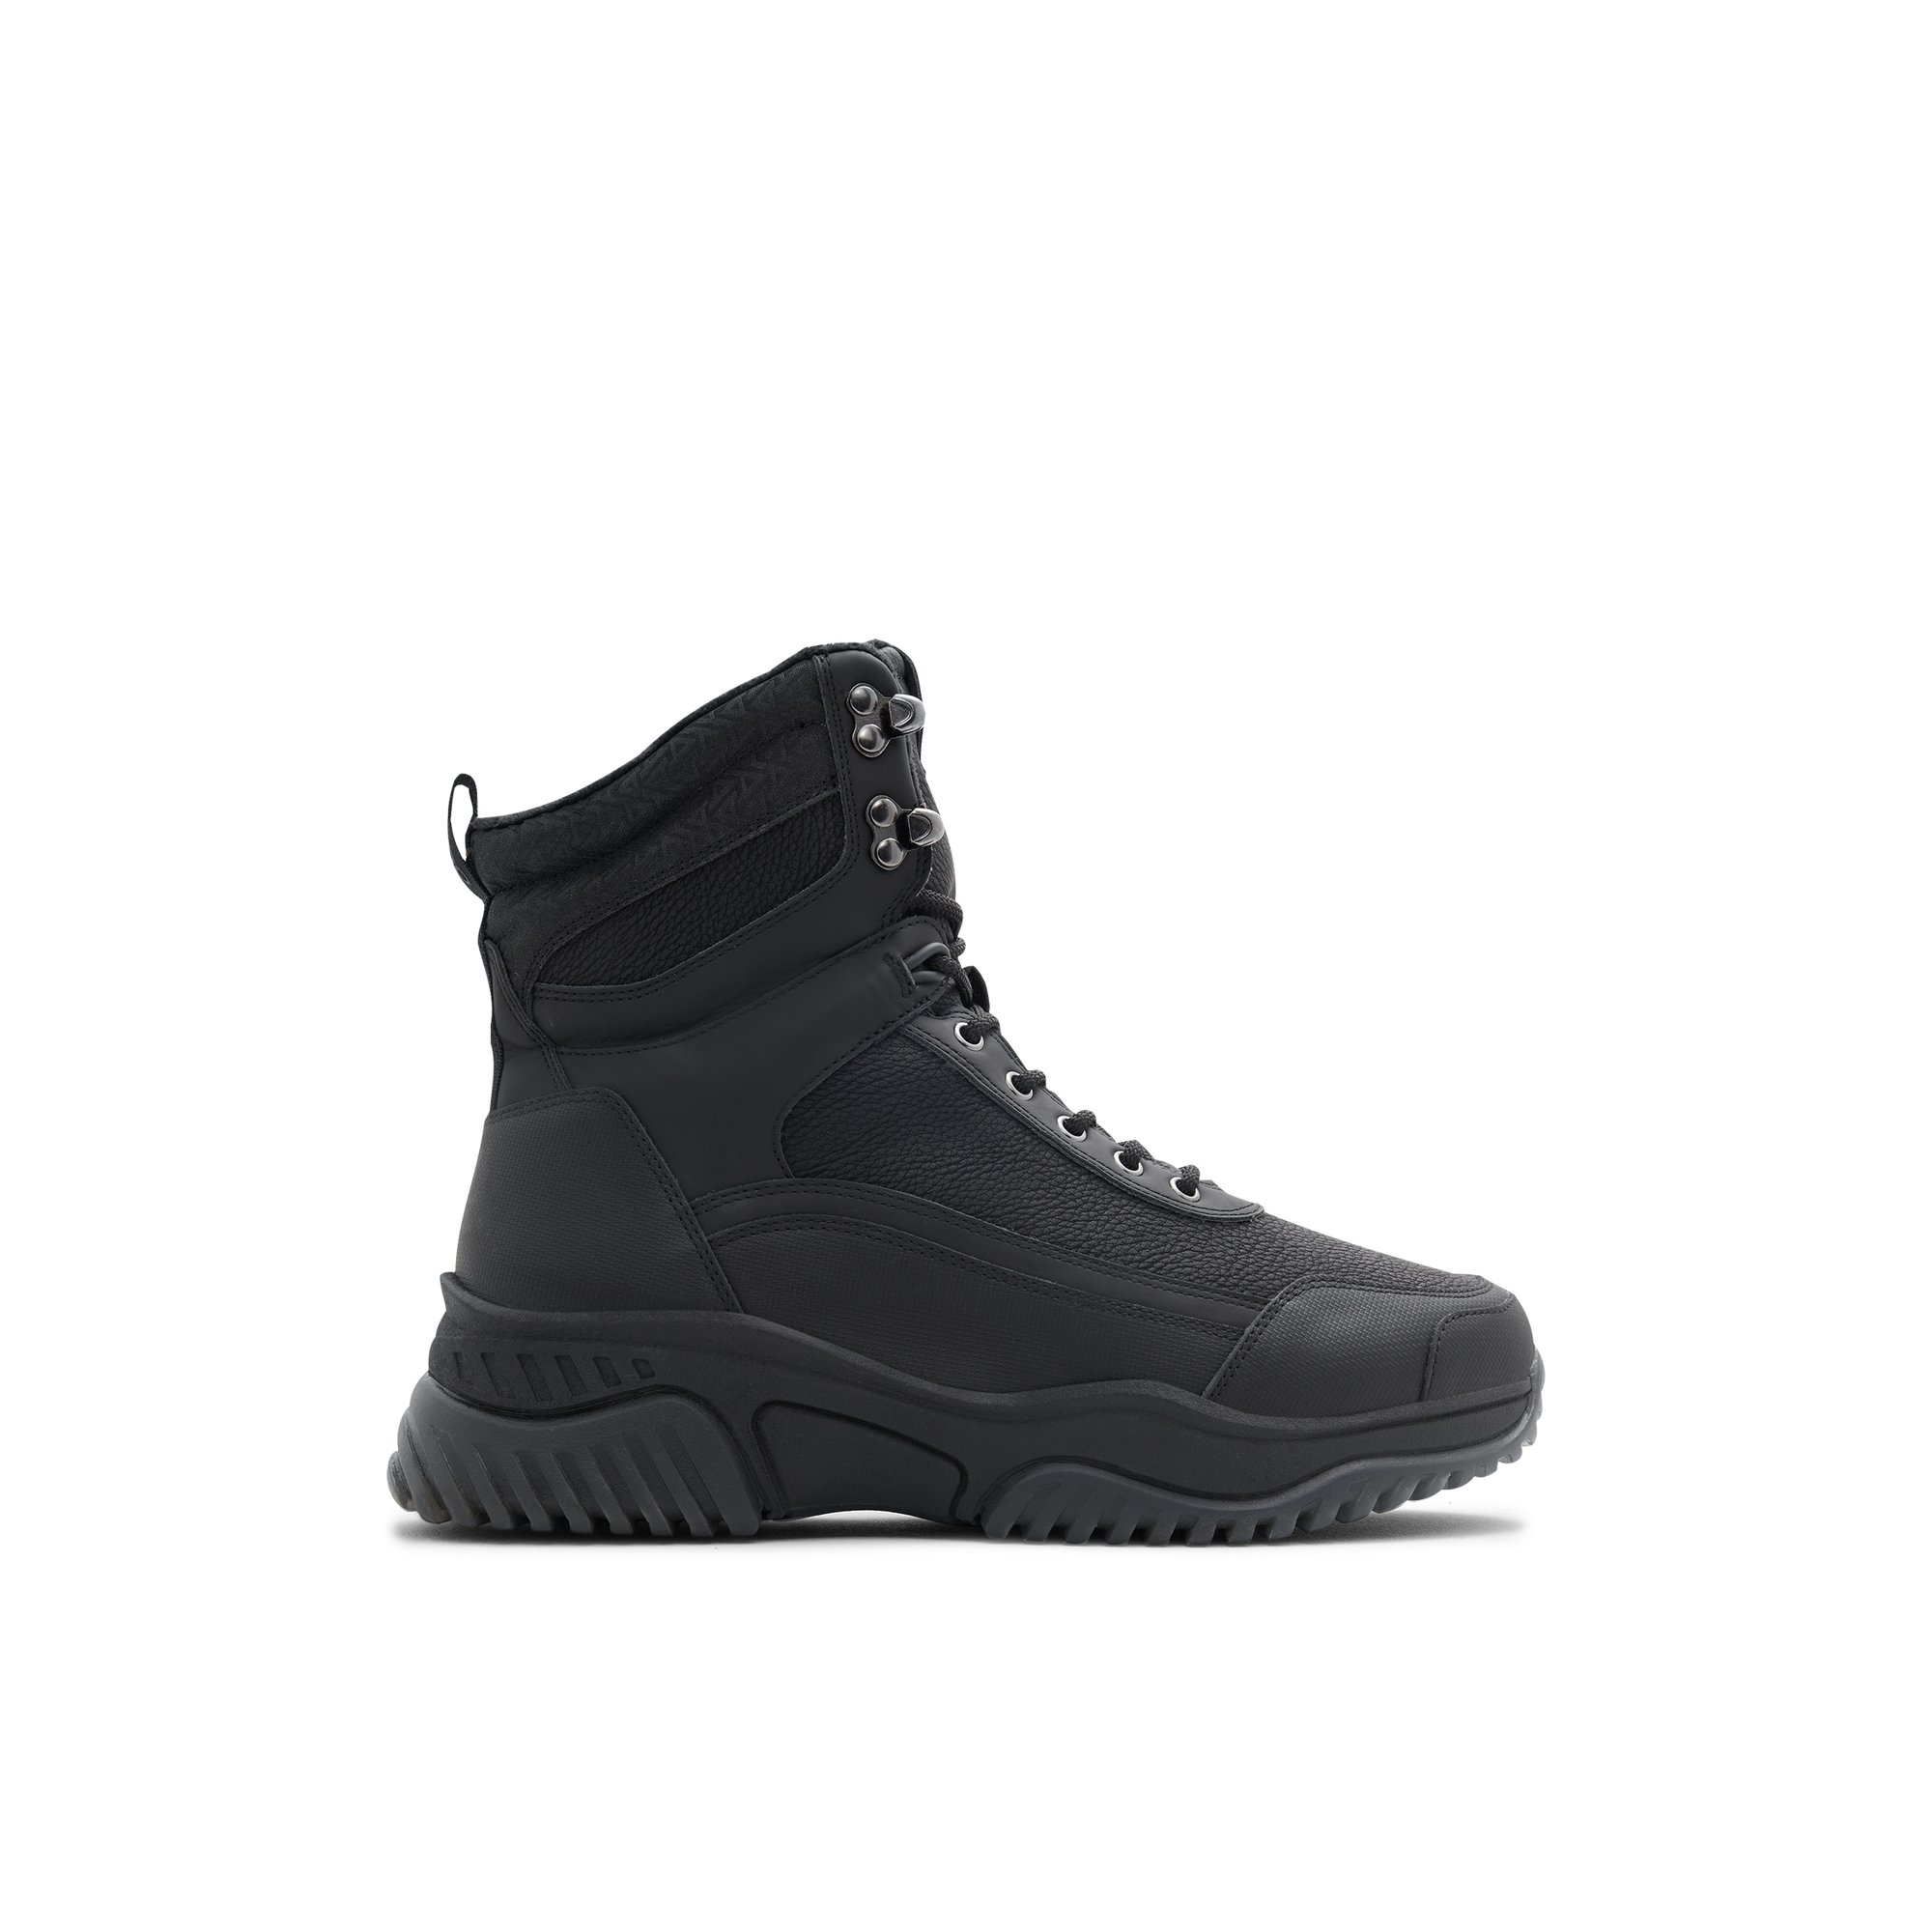 ALDO Mountrock - Men's Boots Casual - Black